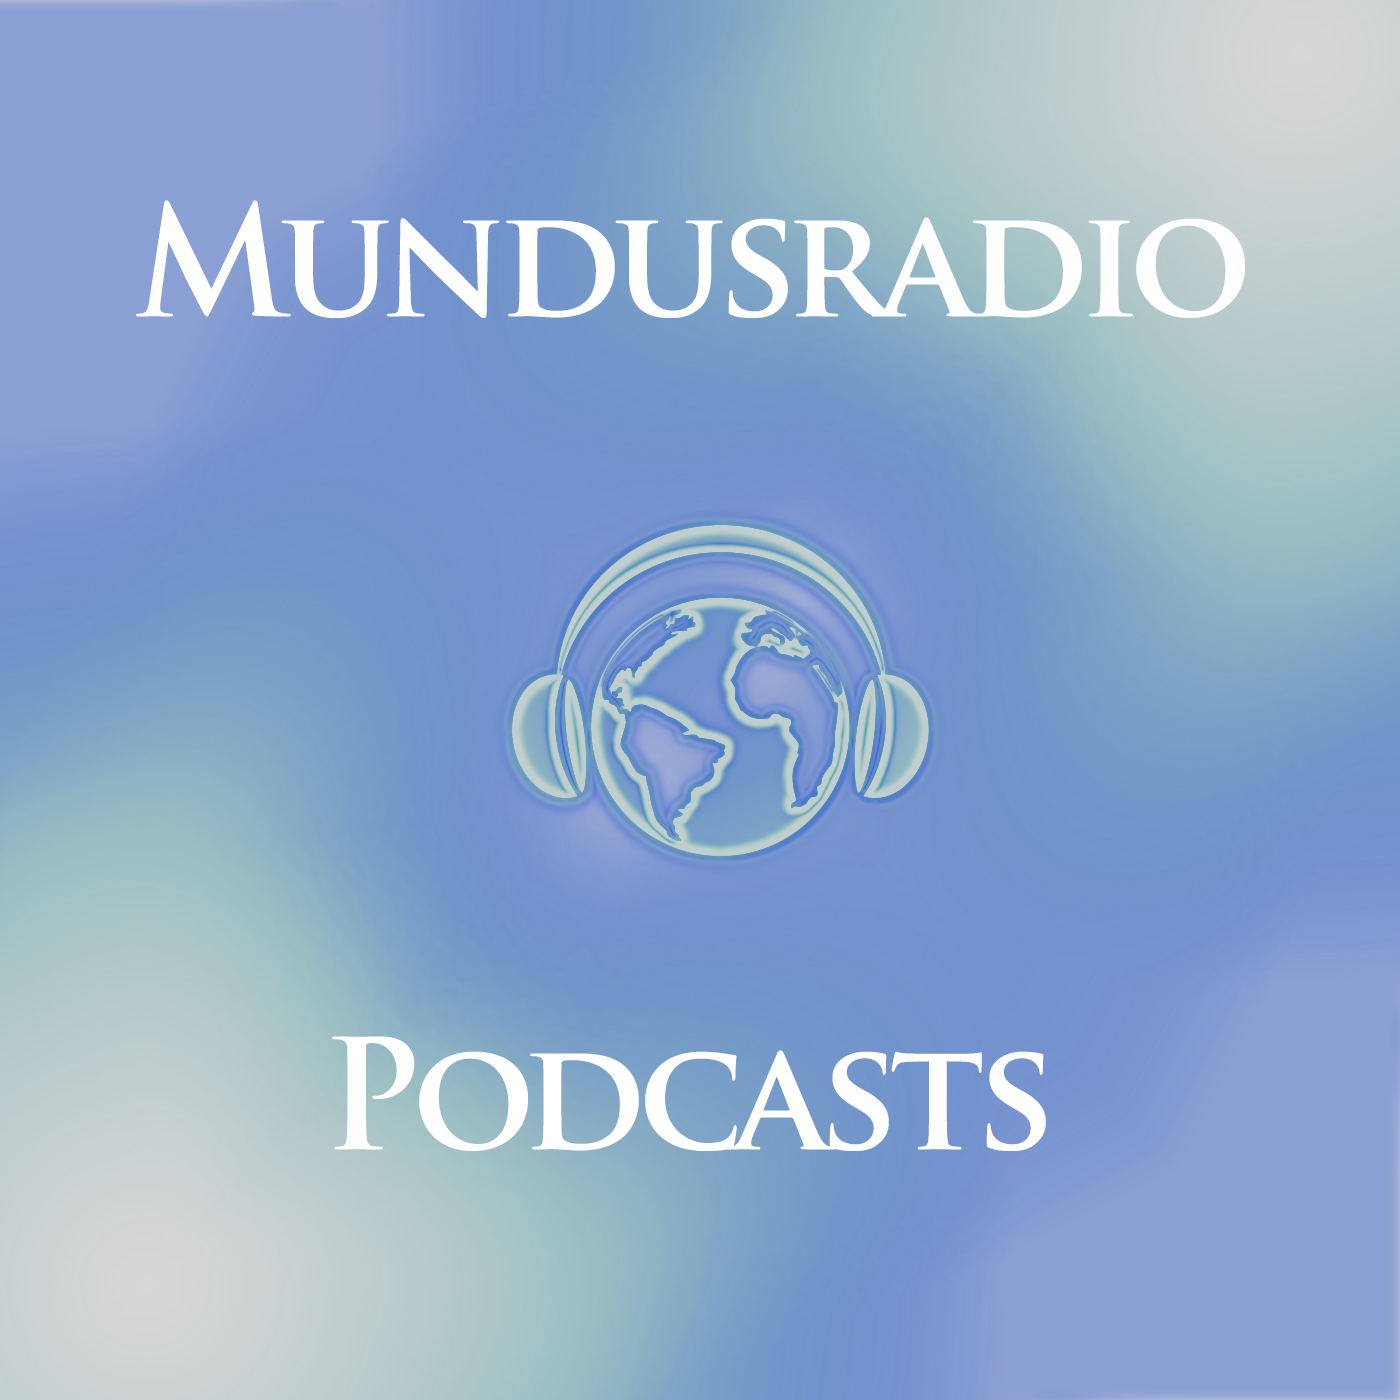 Mundusradio - Podcasts